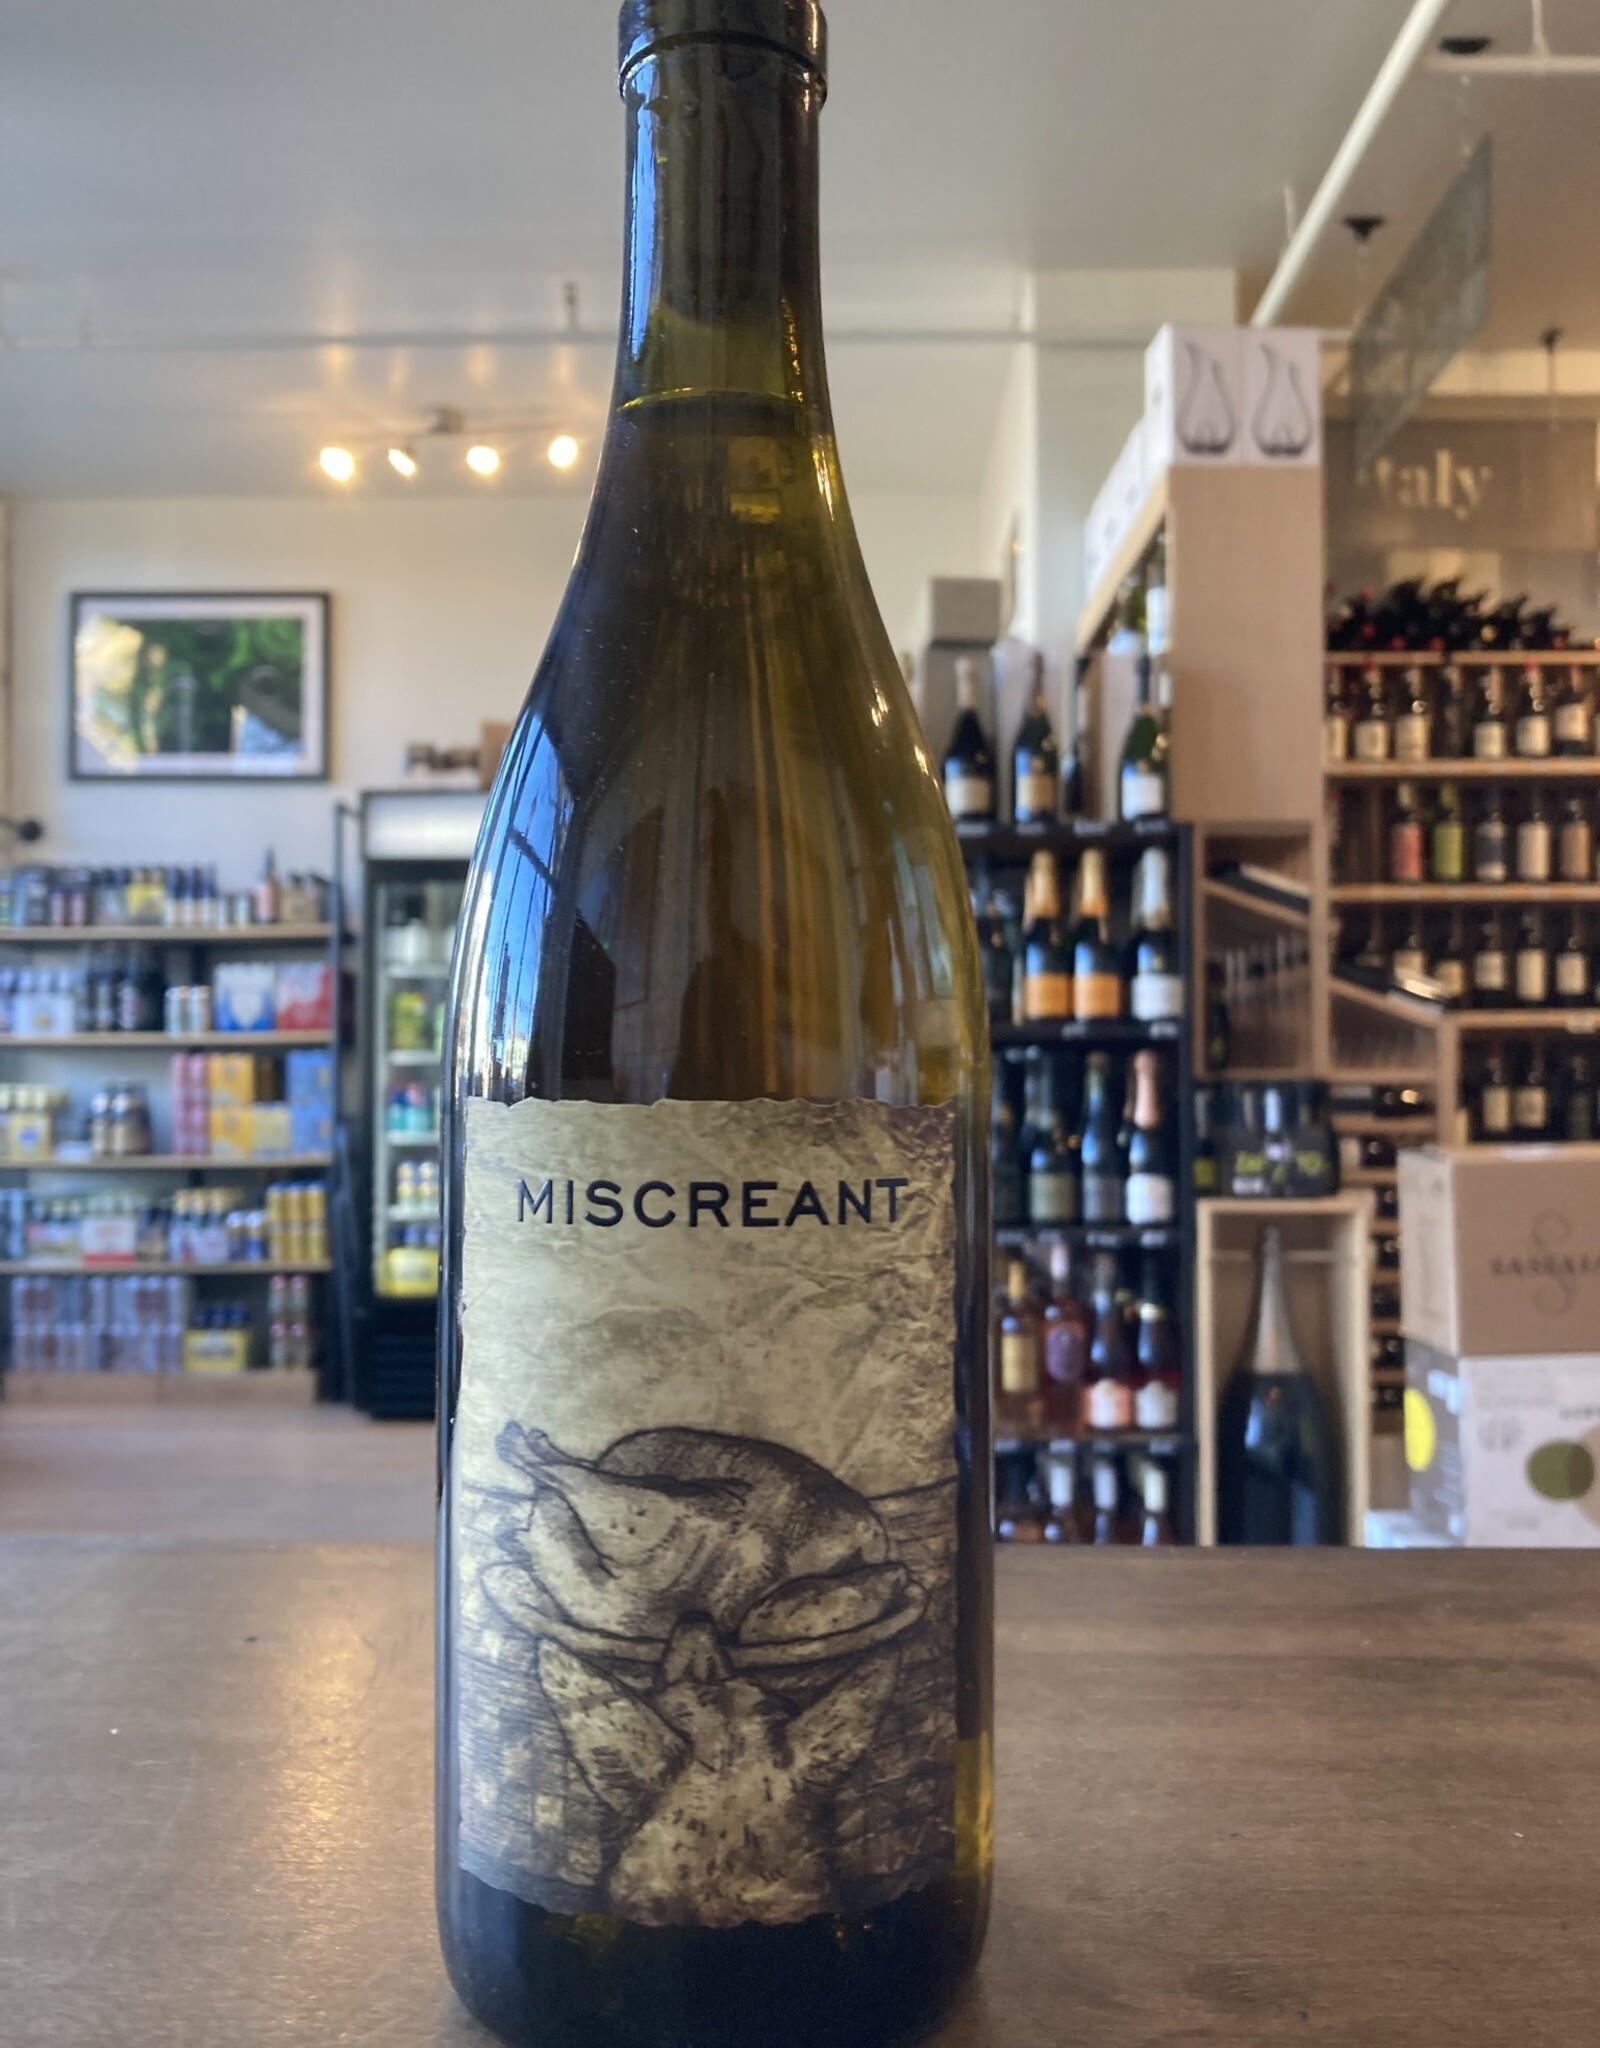 Red Tail Ridge "Miscreant" Orange Chardonnay/Gewurztraminer 2019, Finger Lakes